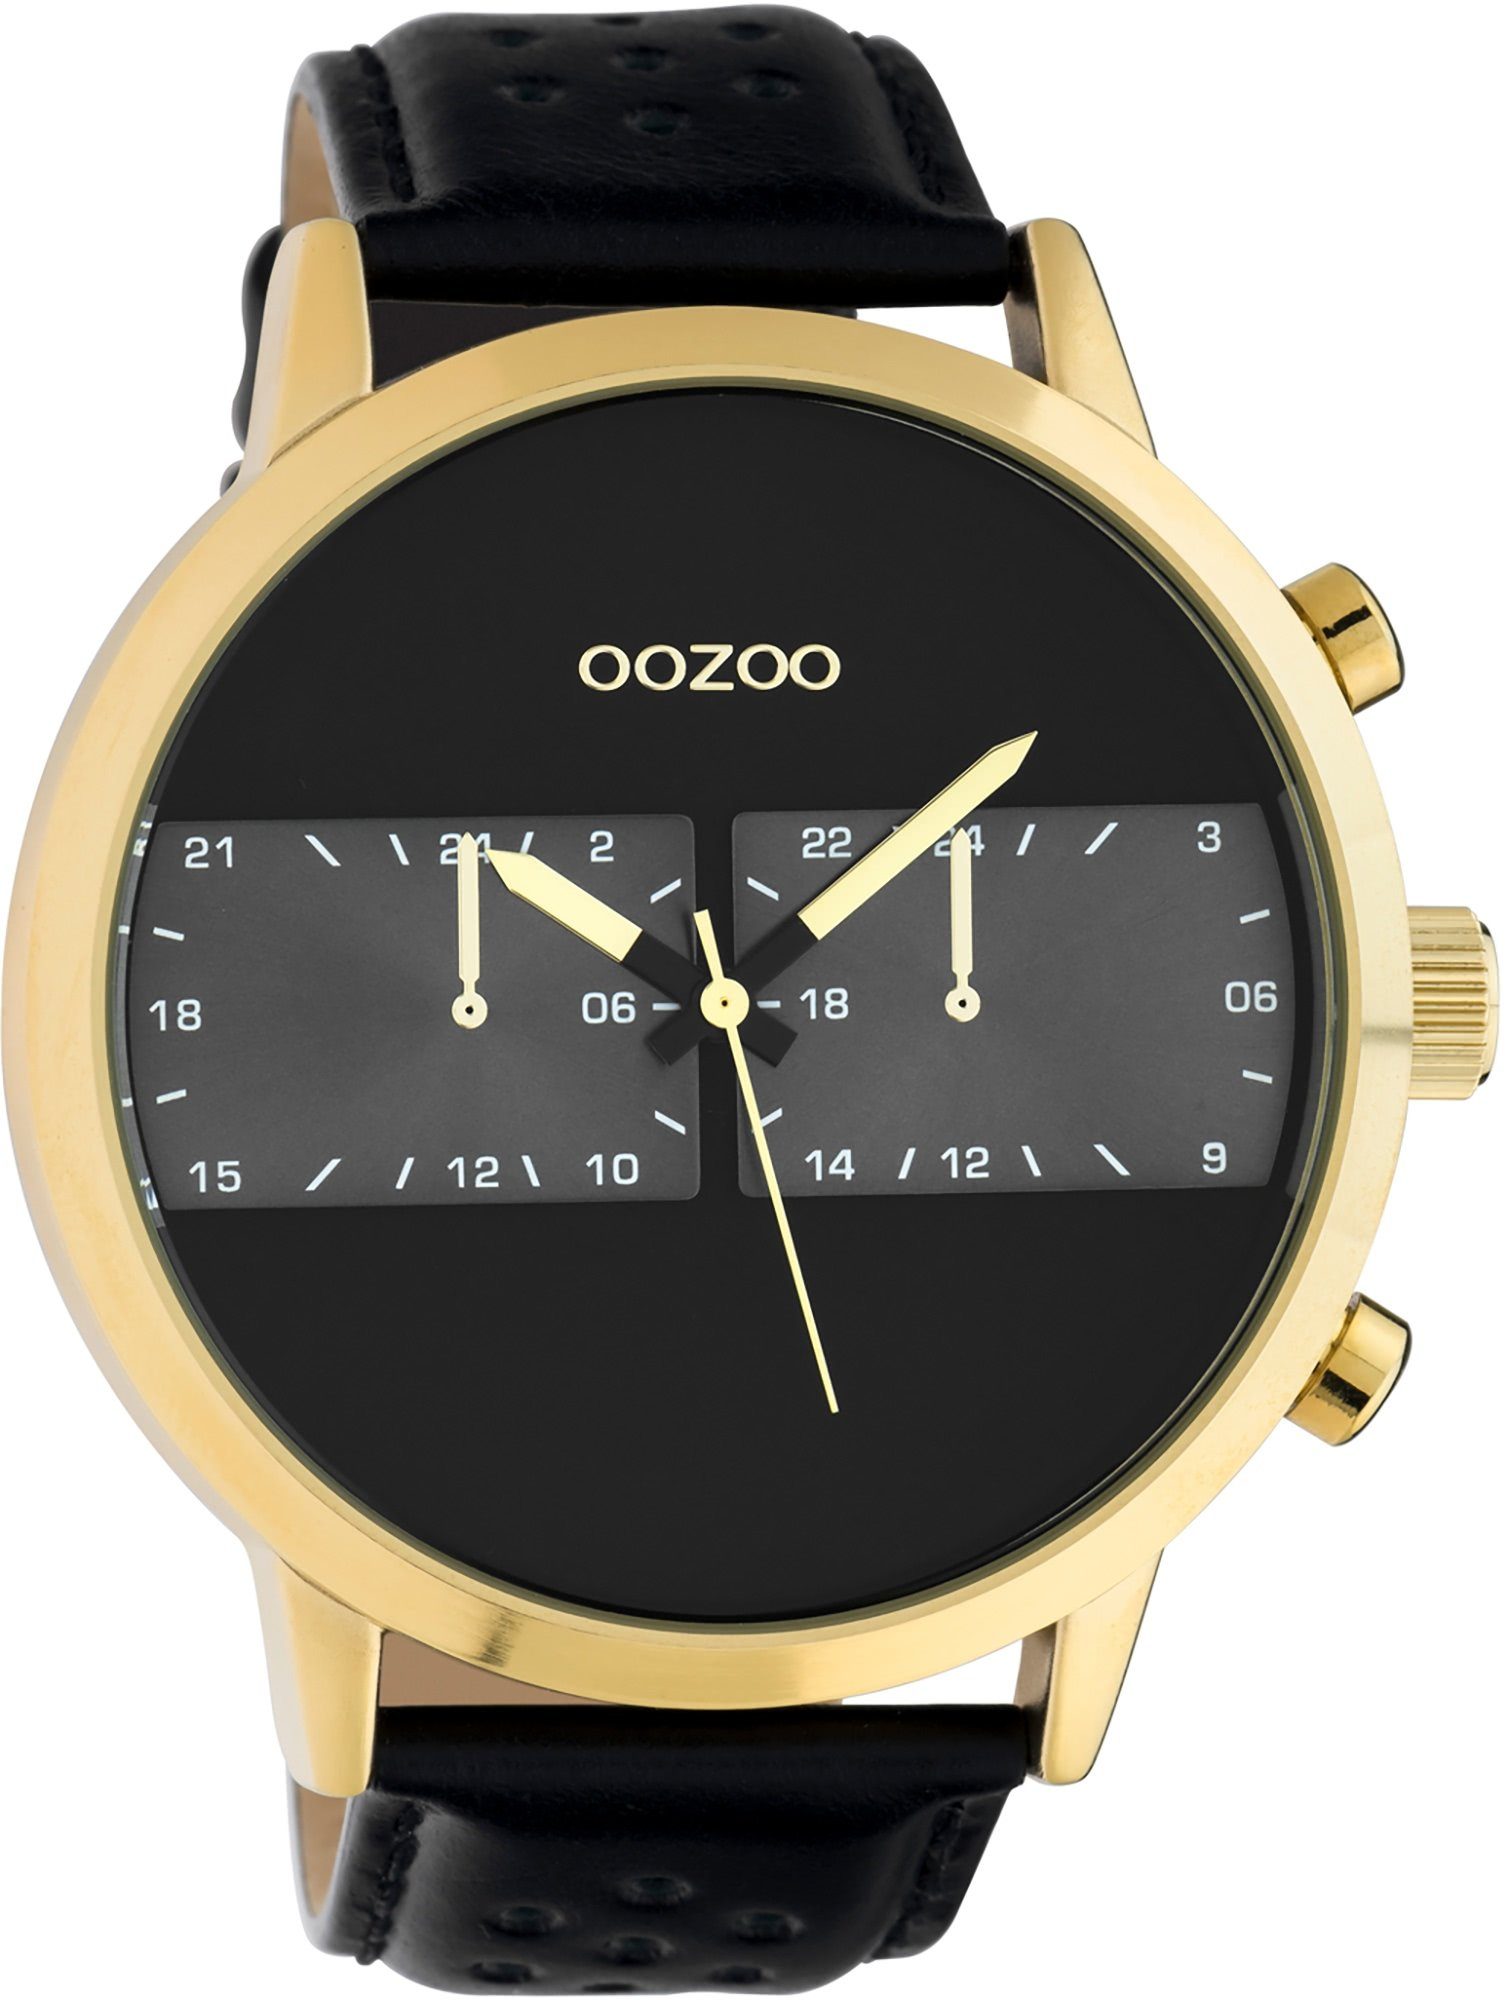 OOZOO (ca. Herrenuhr Armbanduhr goldene Fashion-Style, rund, extra 50mm) groß schwarz Herren Lederarmband, Quarzuhr Zeiger Analog, Oozoo